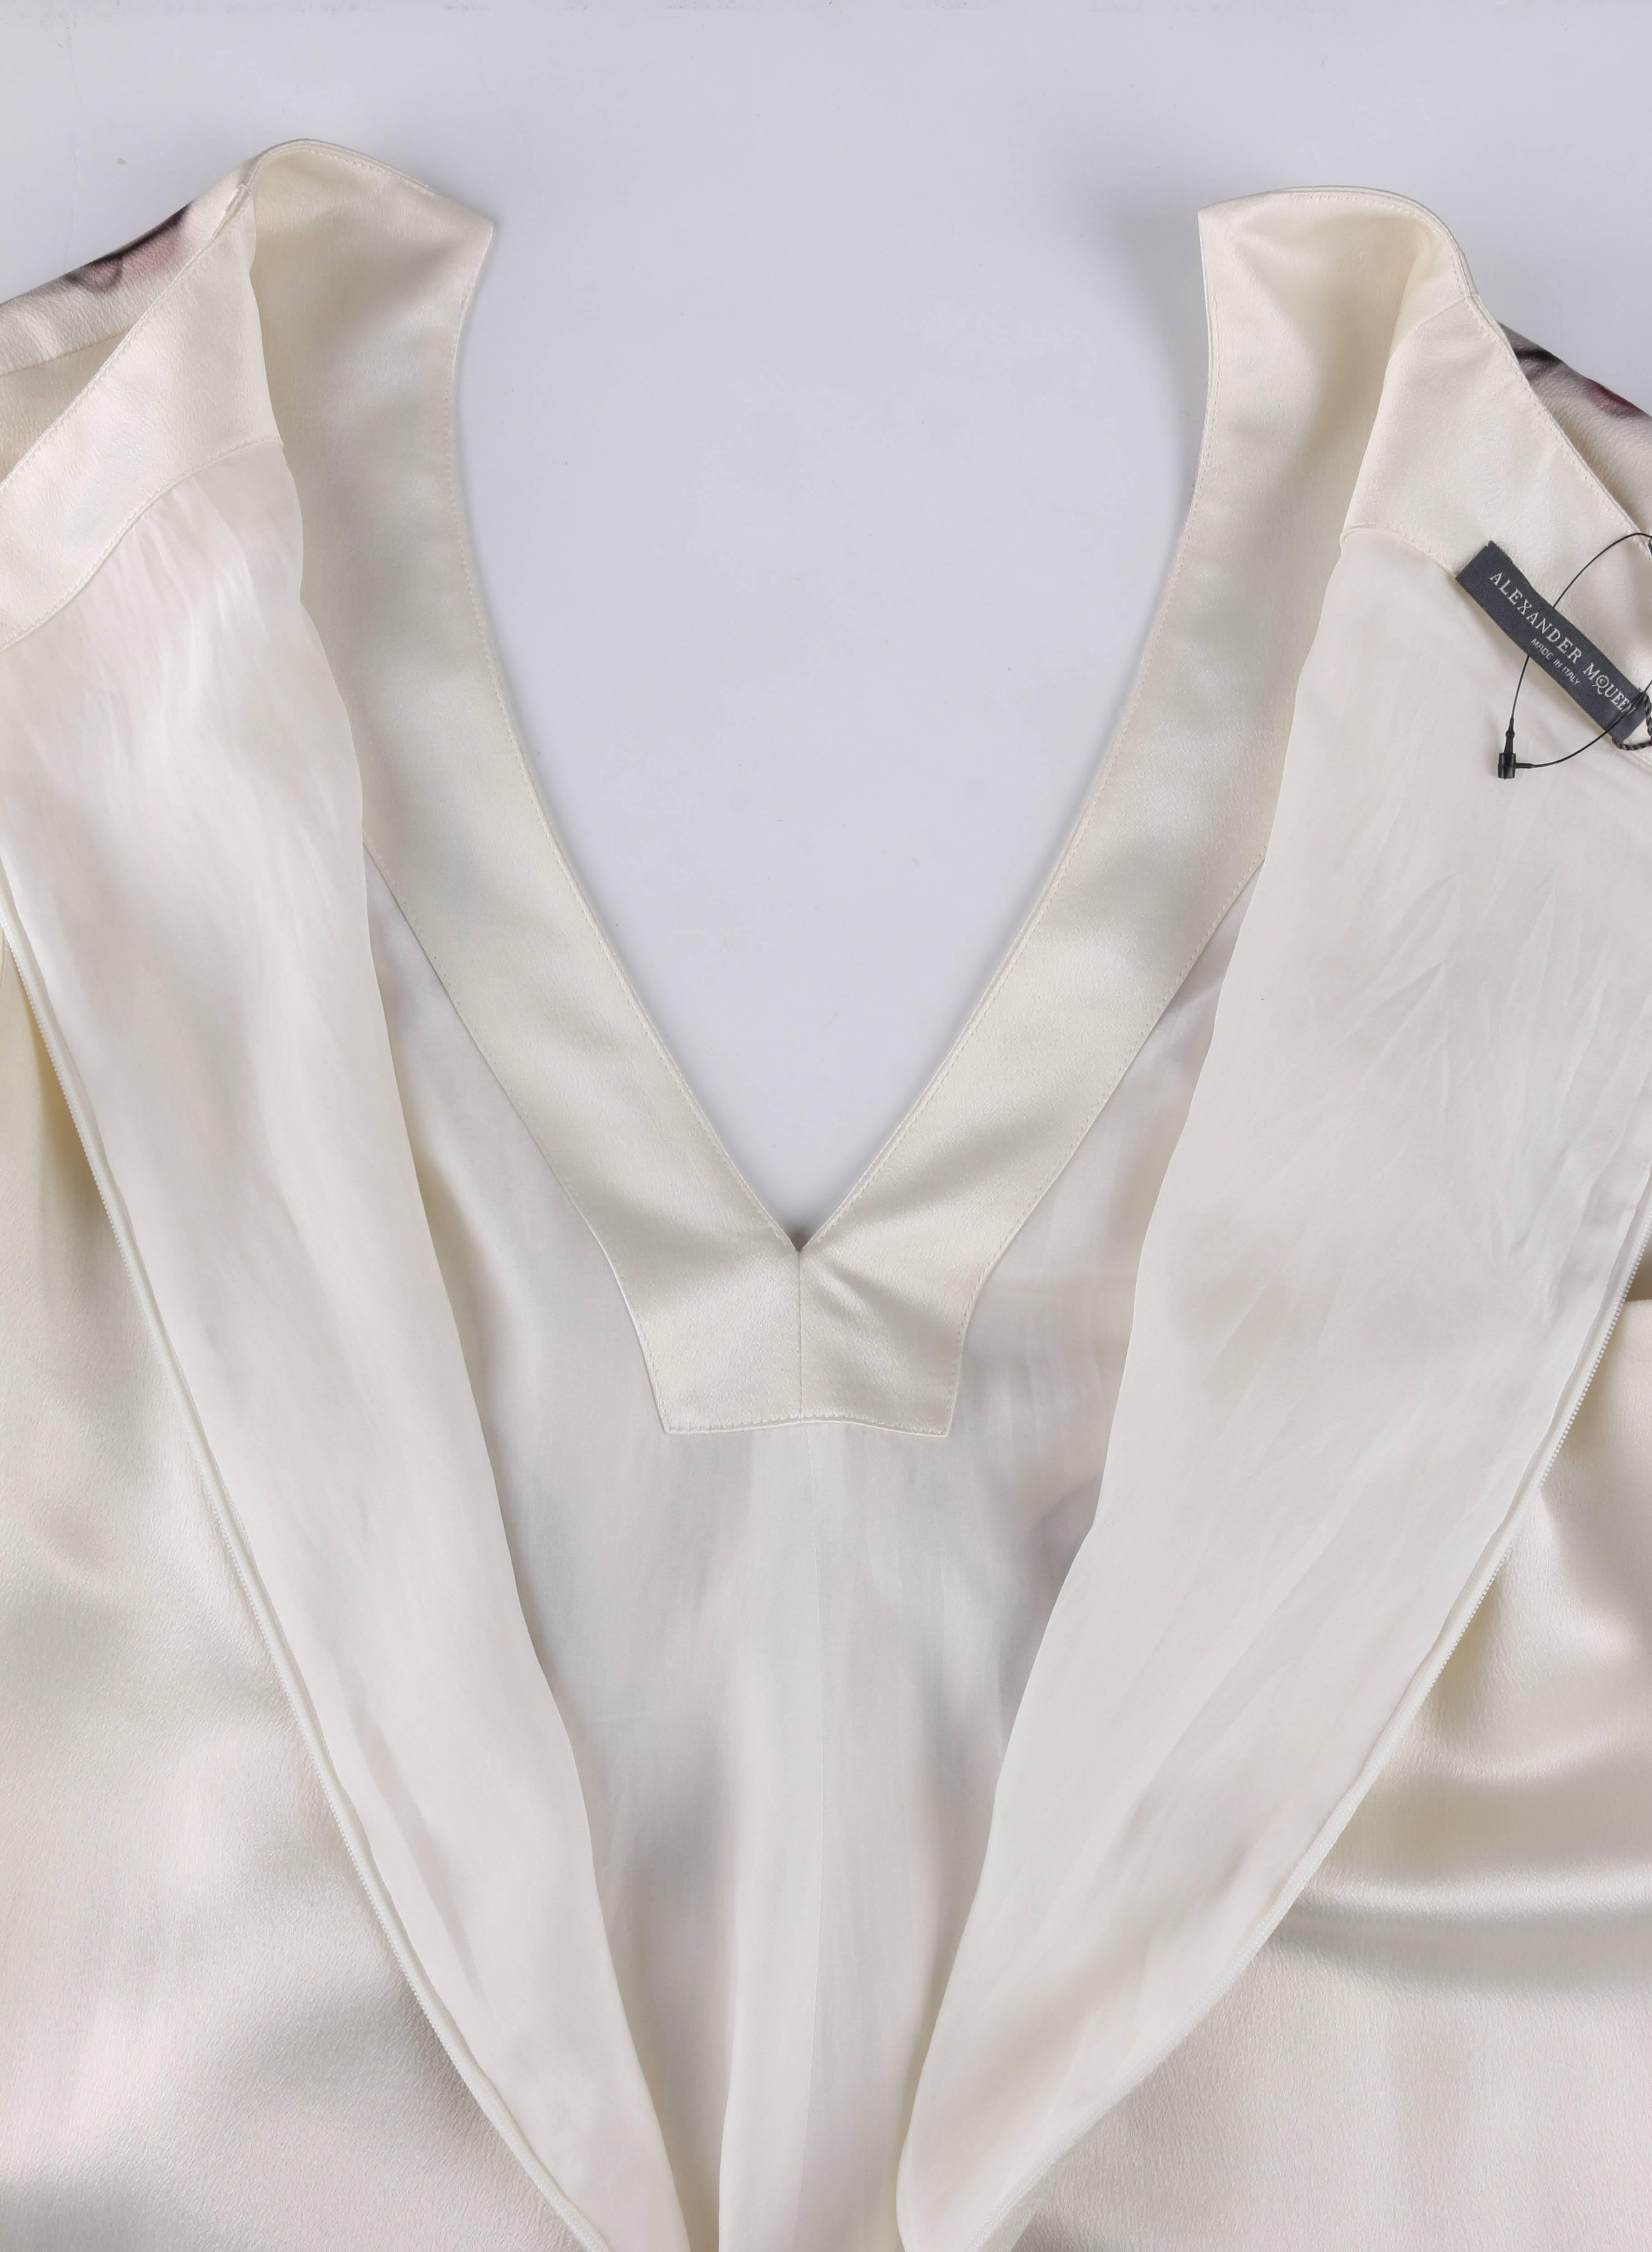 NWT S/S 2009 ALEXANDER McQUEEN White 100% Silk Smoke Print Shift Dress Size 44 For Sale 2